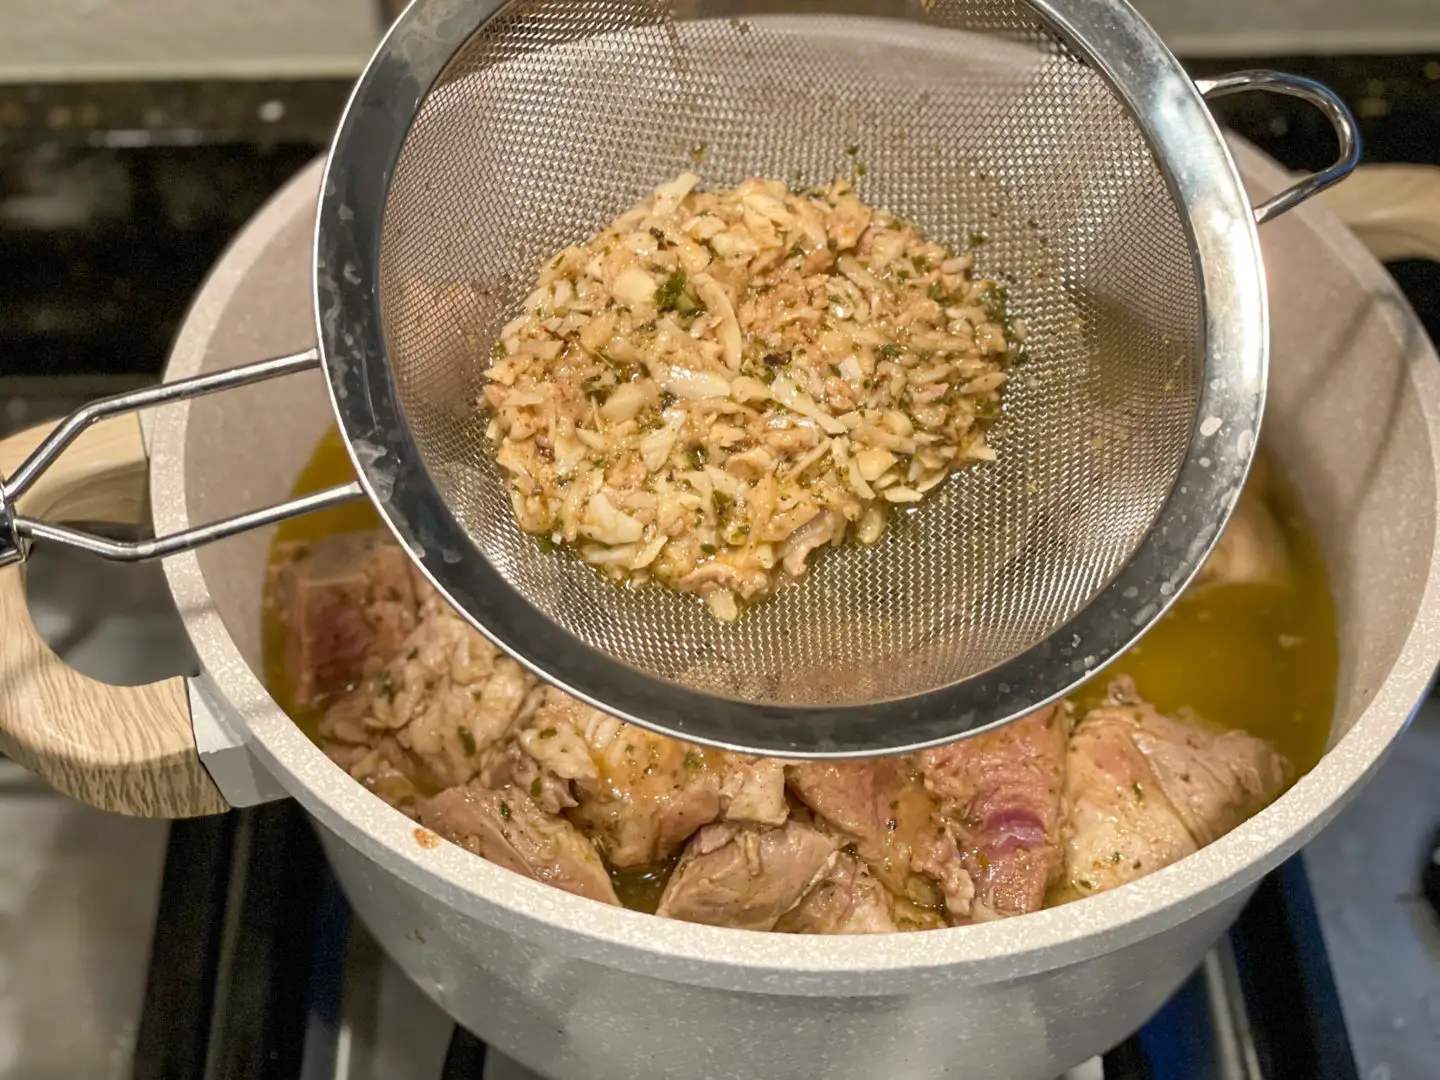 Adding mojo criollo to pork chunks straining out the garlic.